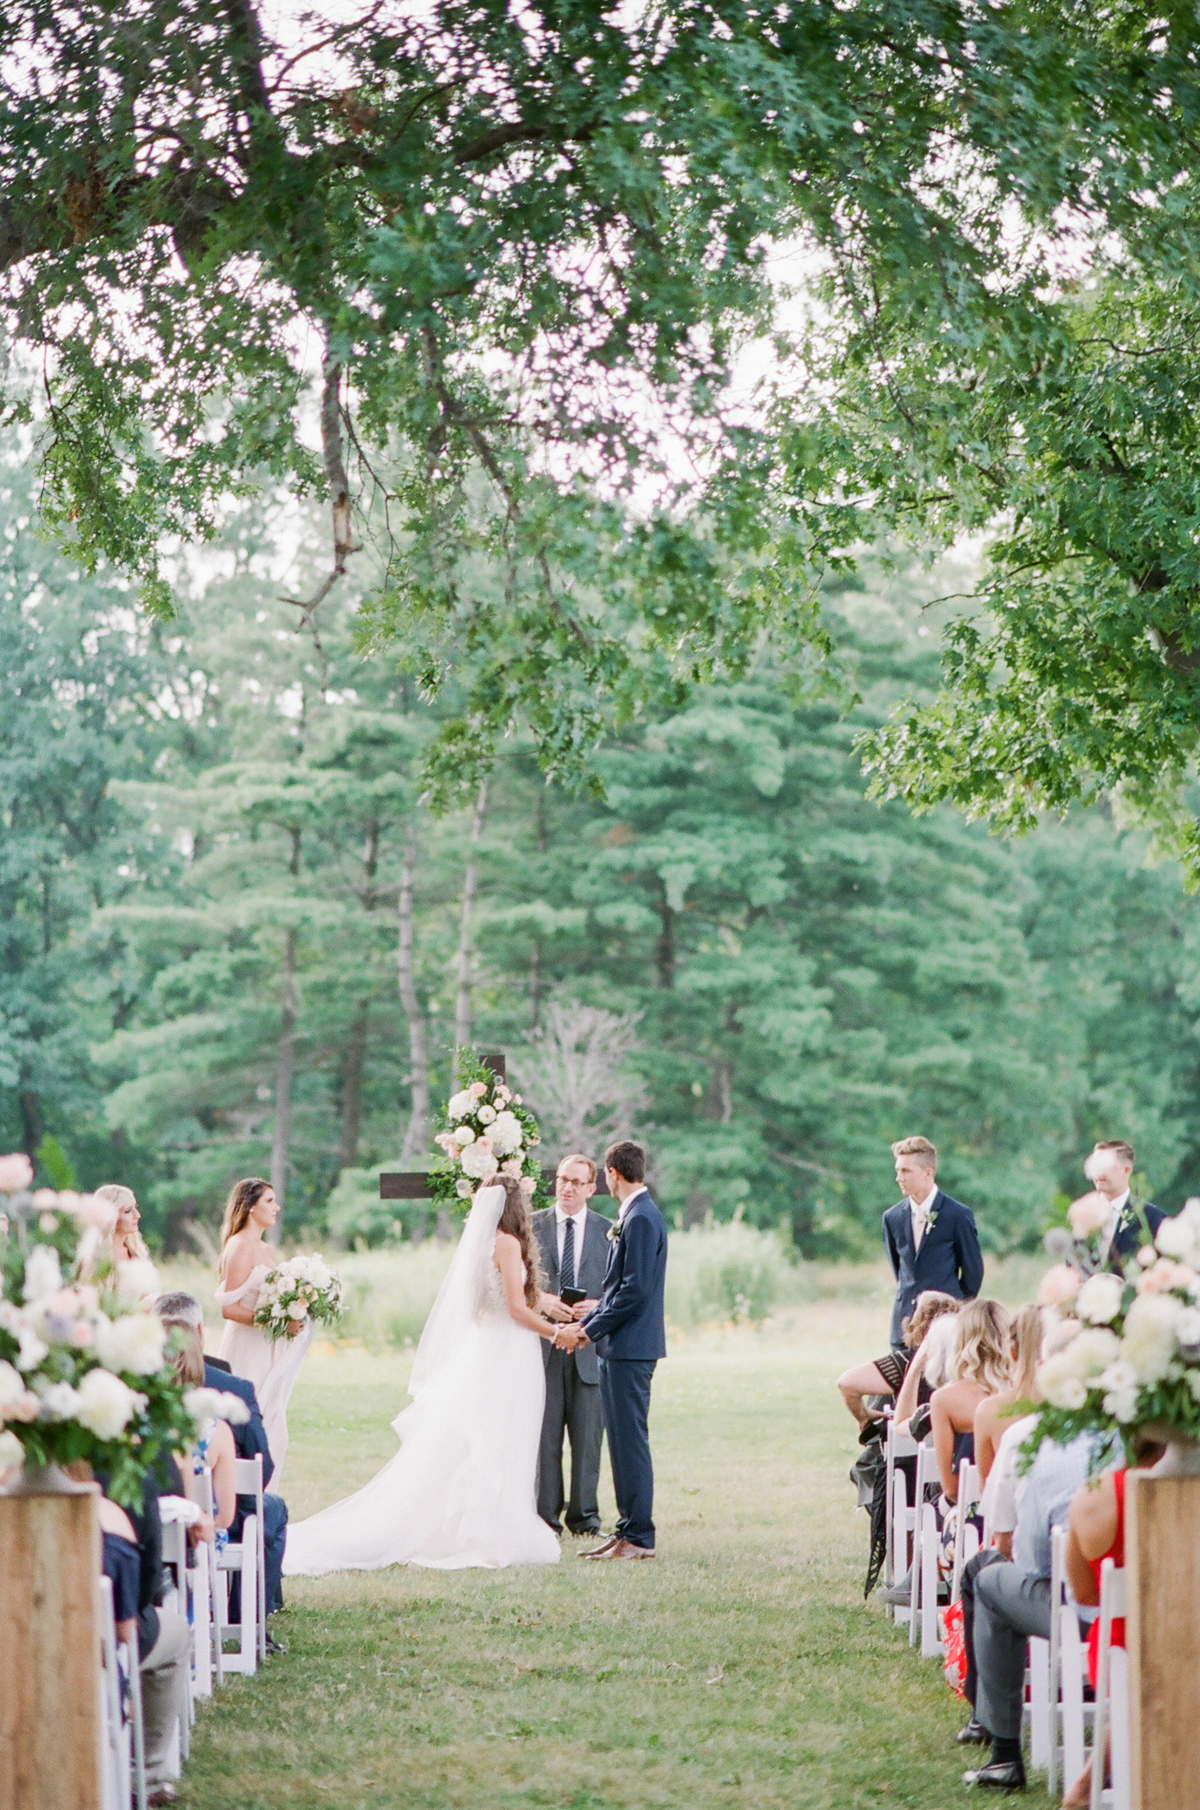 acacia ballroom wedding, cleveland wedding, blush garden wedding, wedding ceremony, outdoor ceremony, wedding ceremony decor